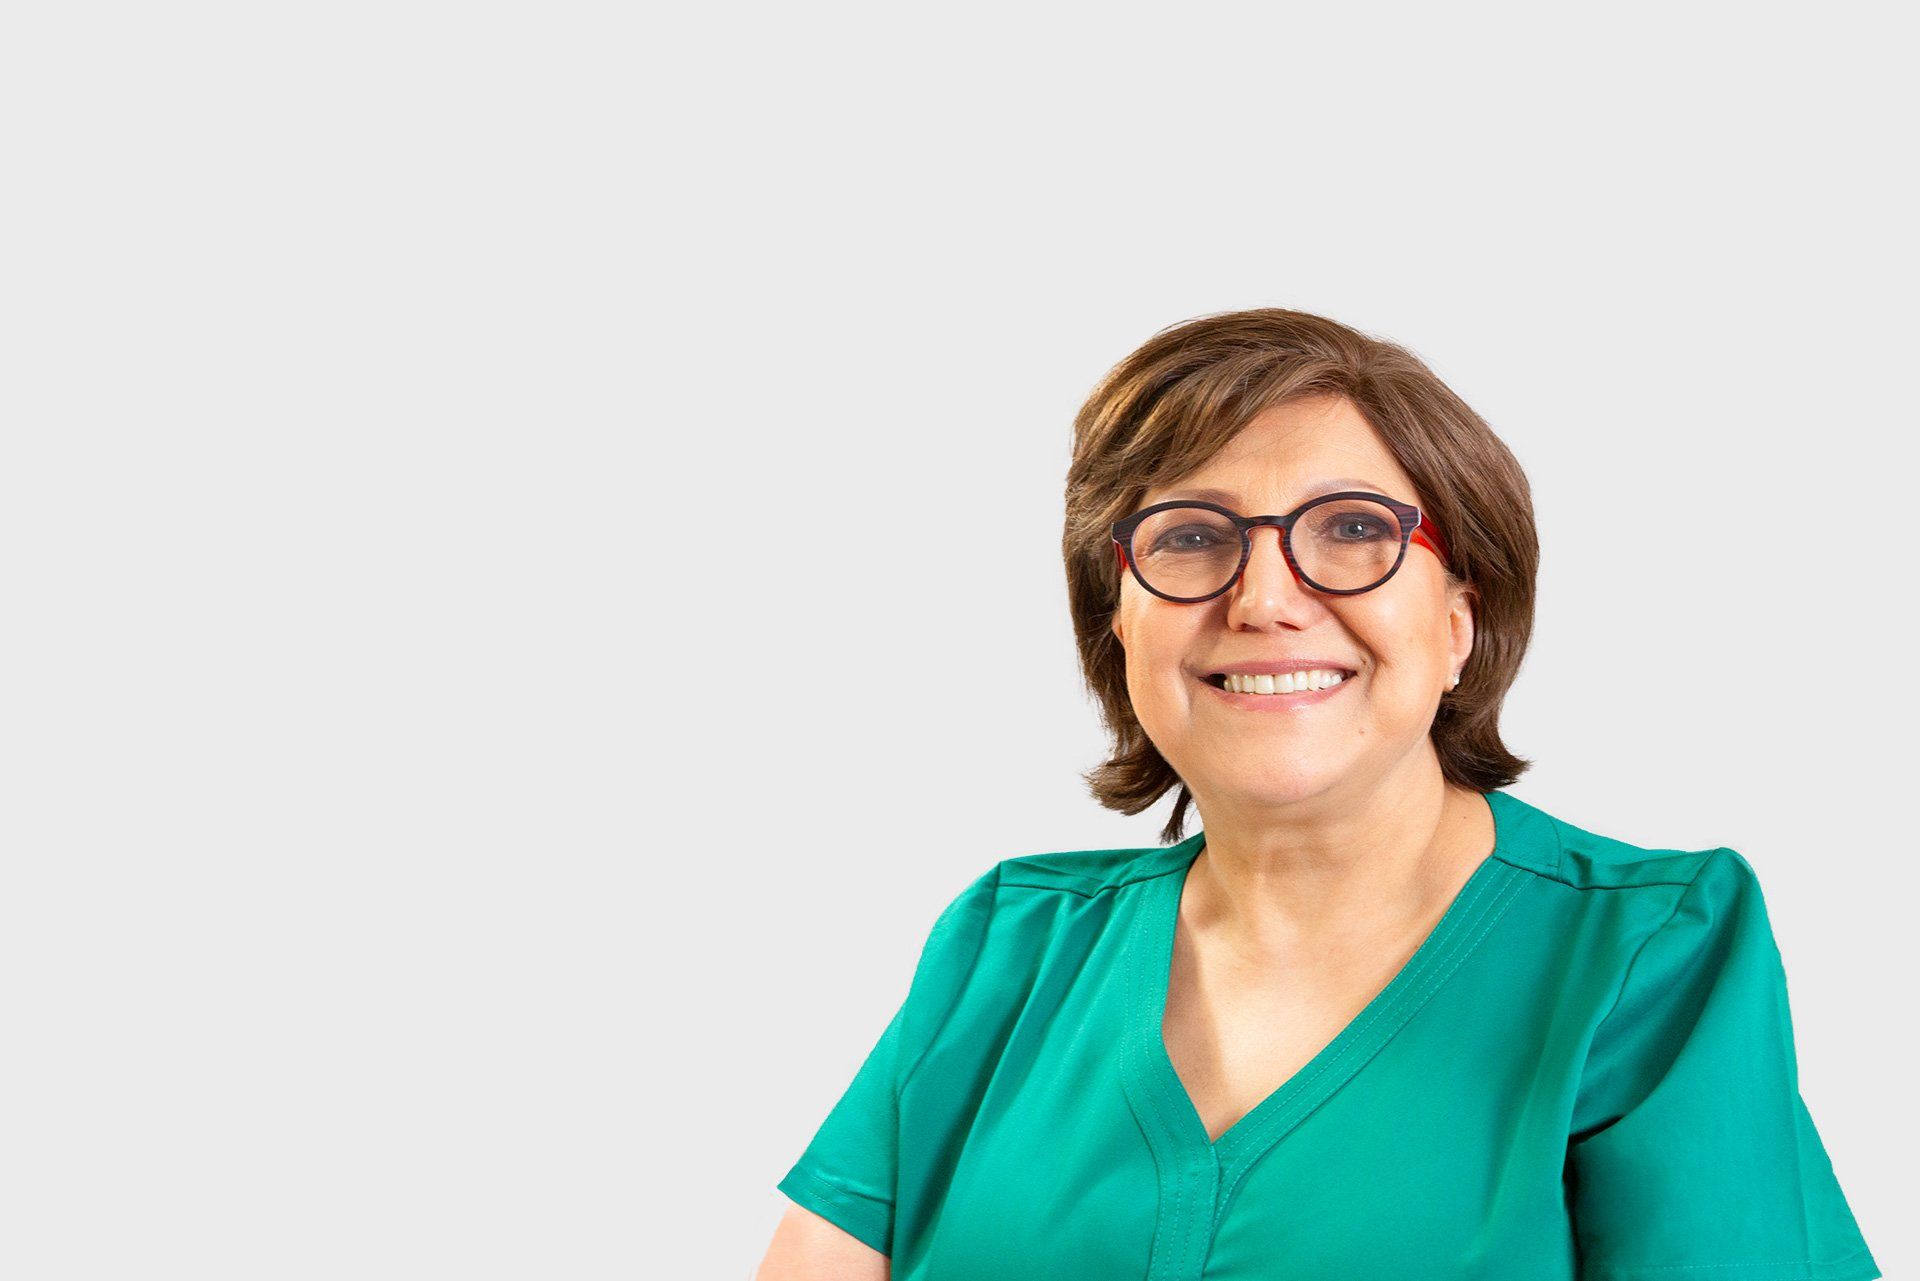 Dr Maryam Seifi